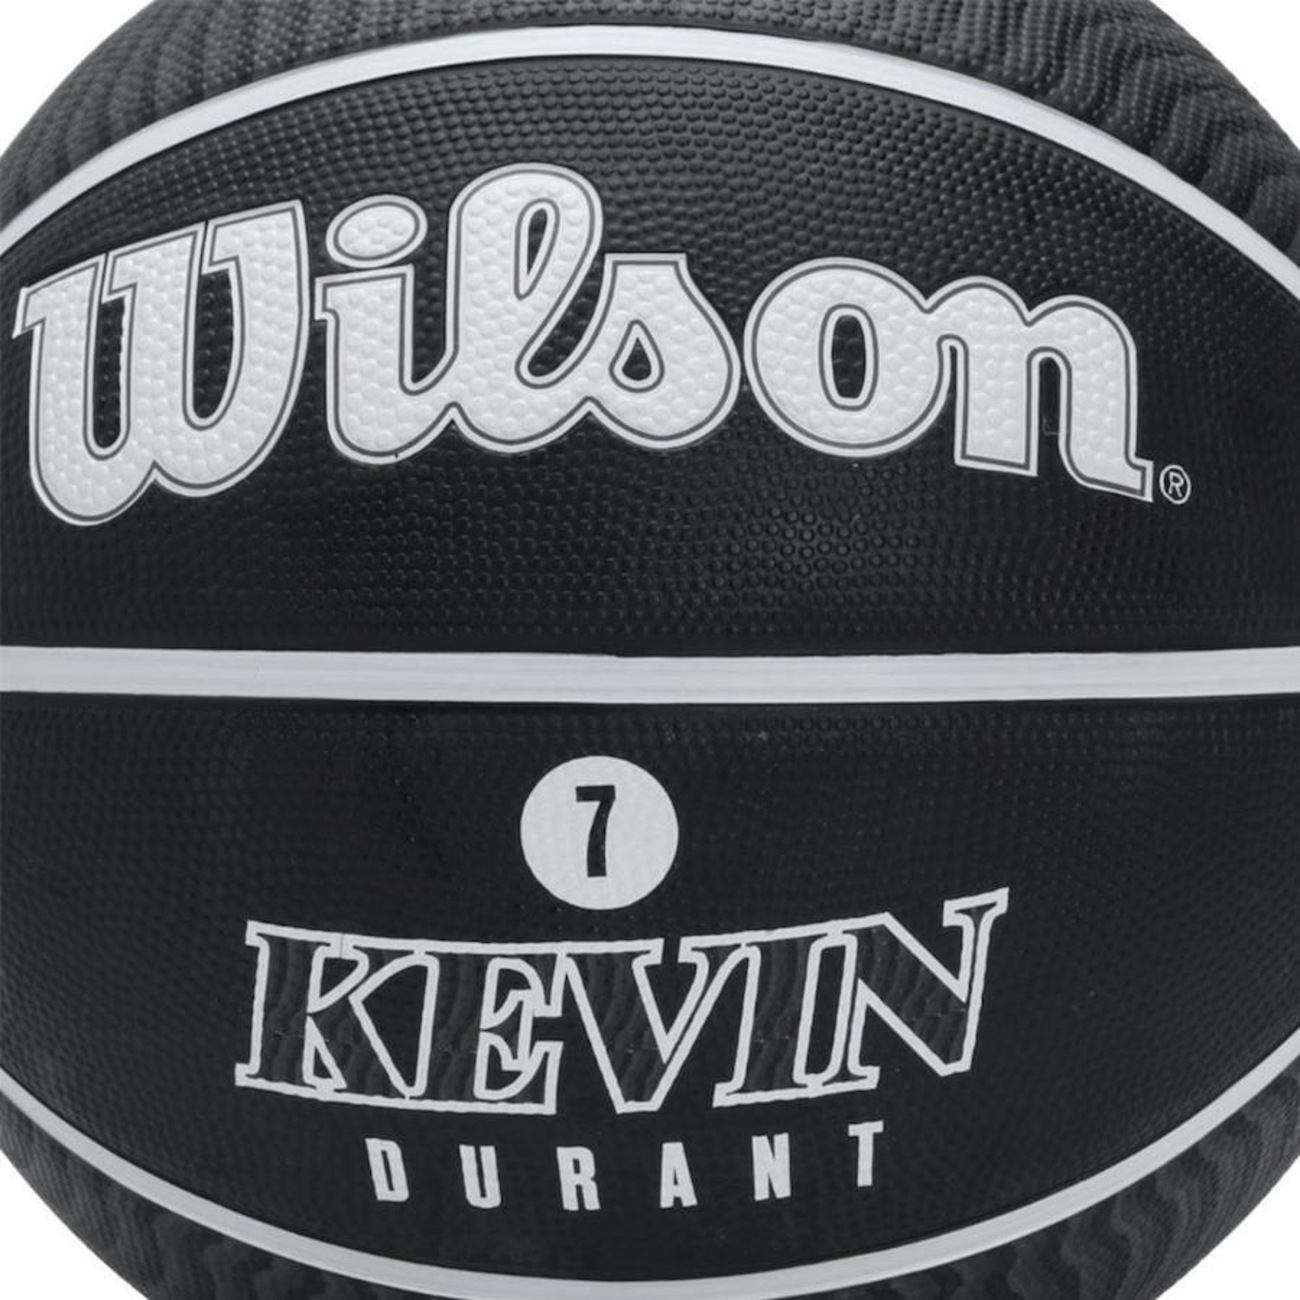 Bola de Basquete Wilson NBA Player Icon Durant Tamanho 7 - HUPI